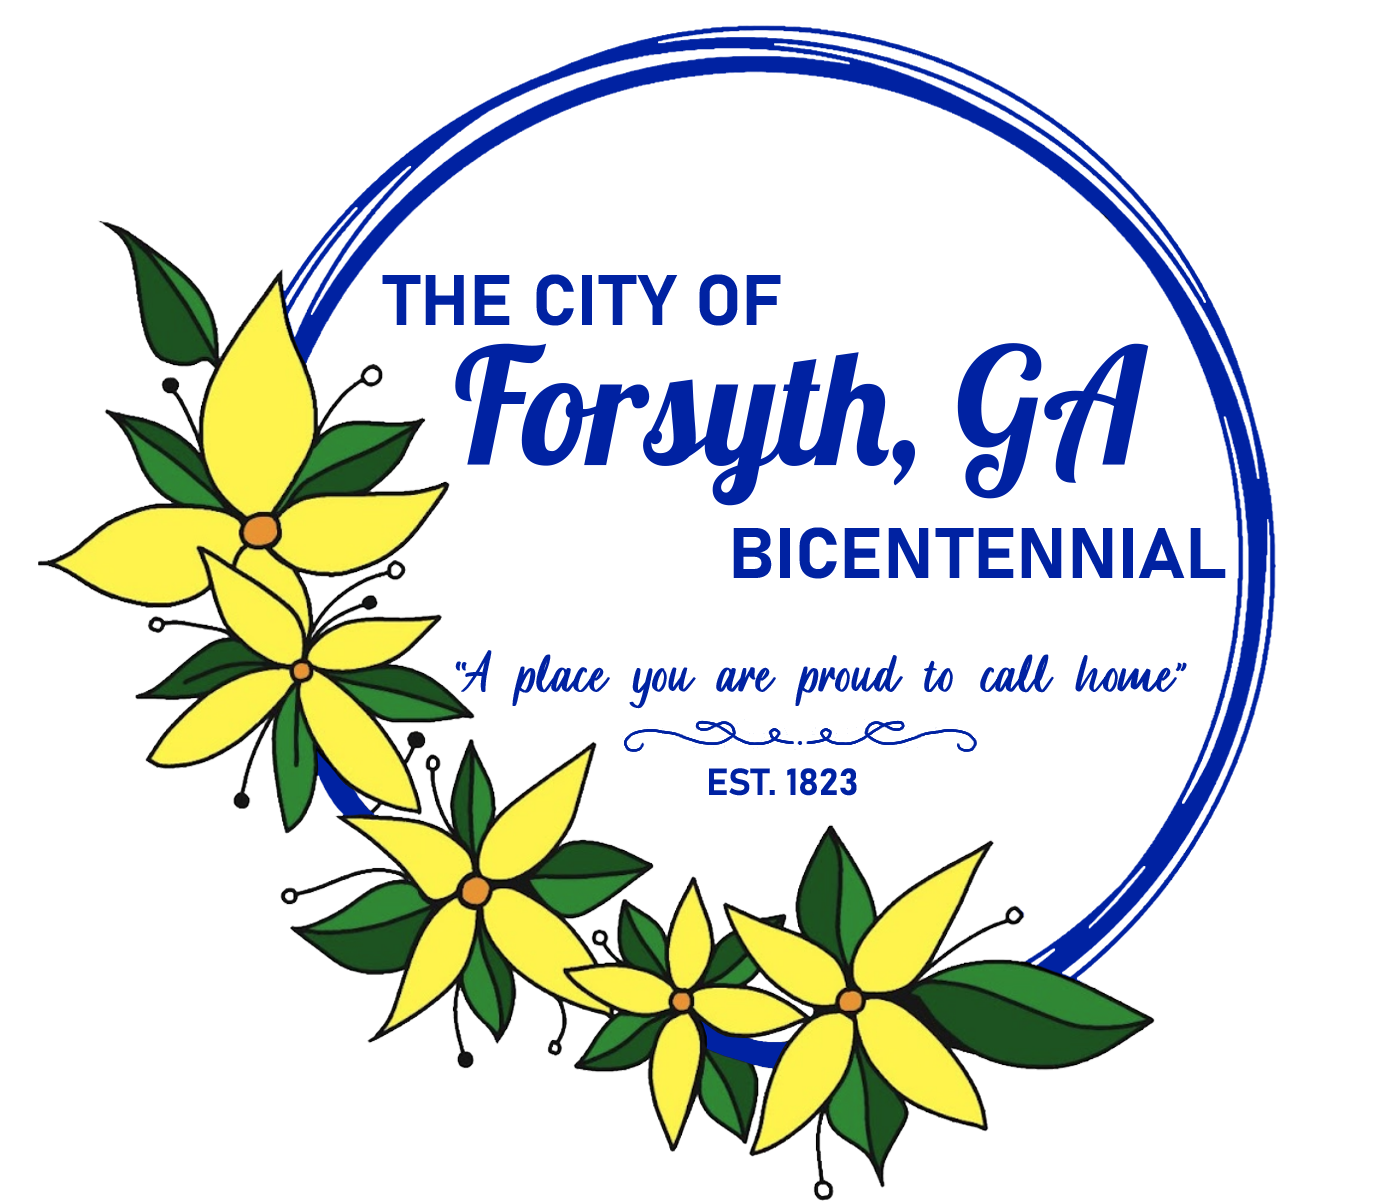 The City of Forsyth, GA Bicentennial Logo Established 1823